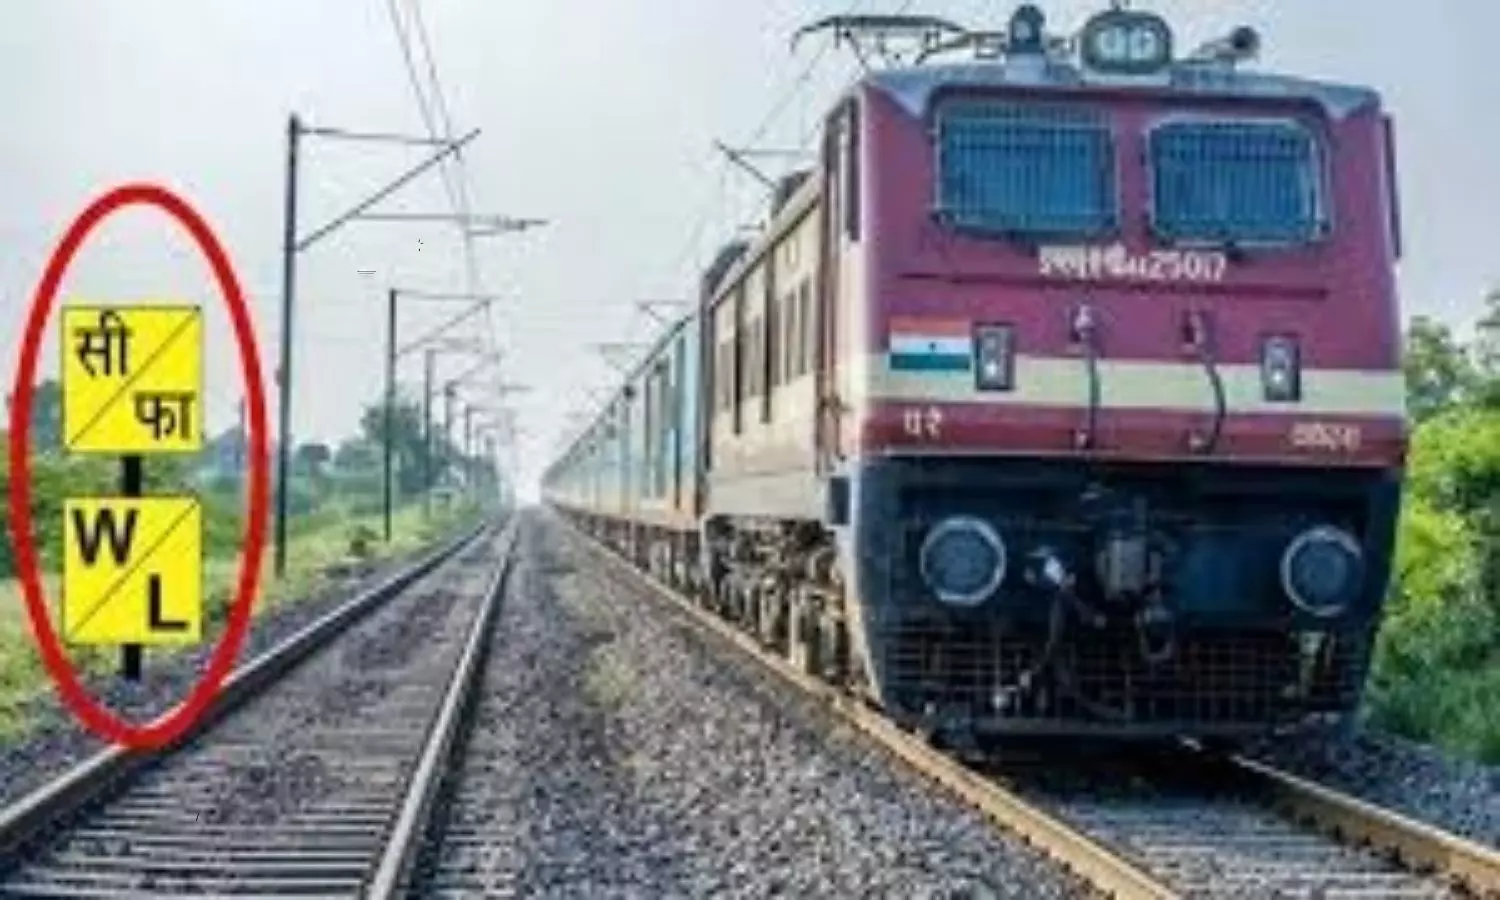 Check C/Fa, W/L board on railway track indian railway amazing fact